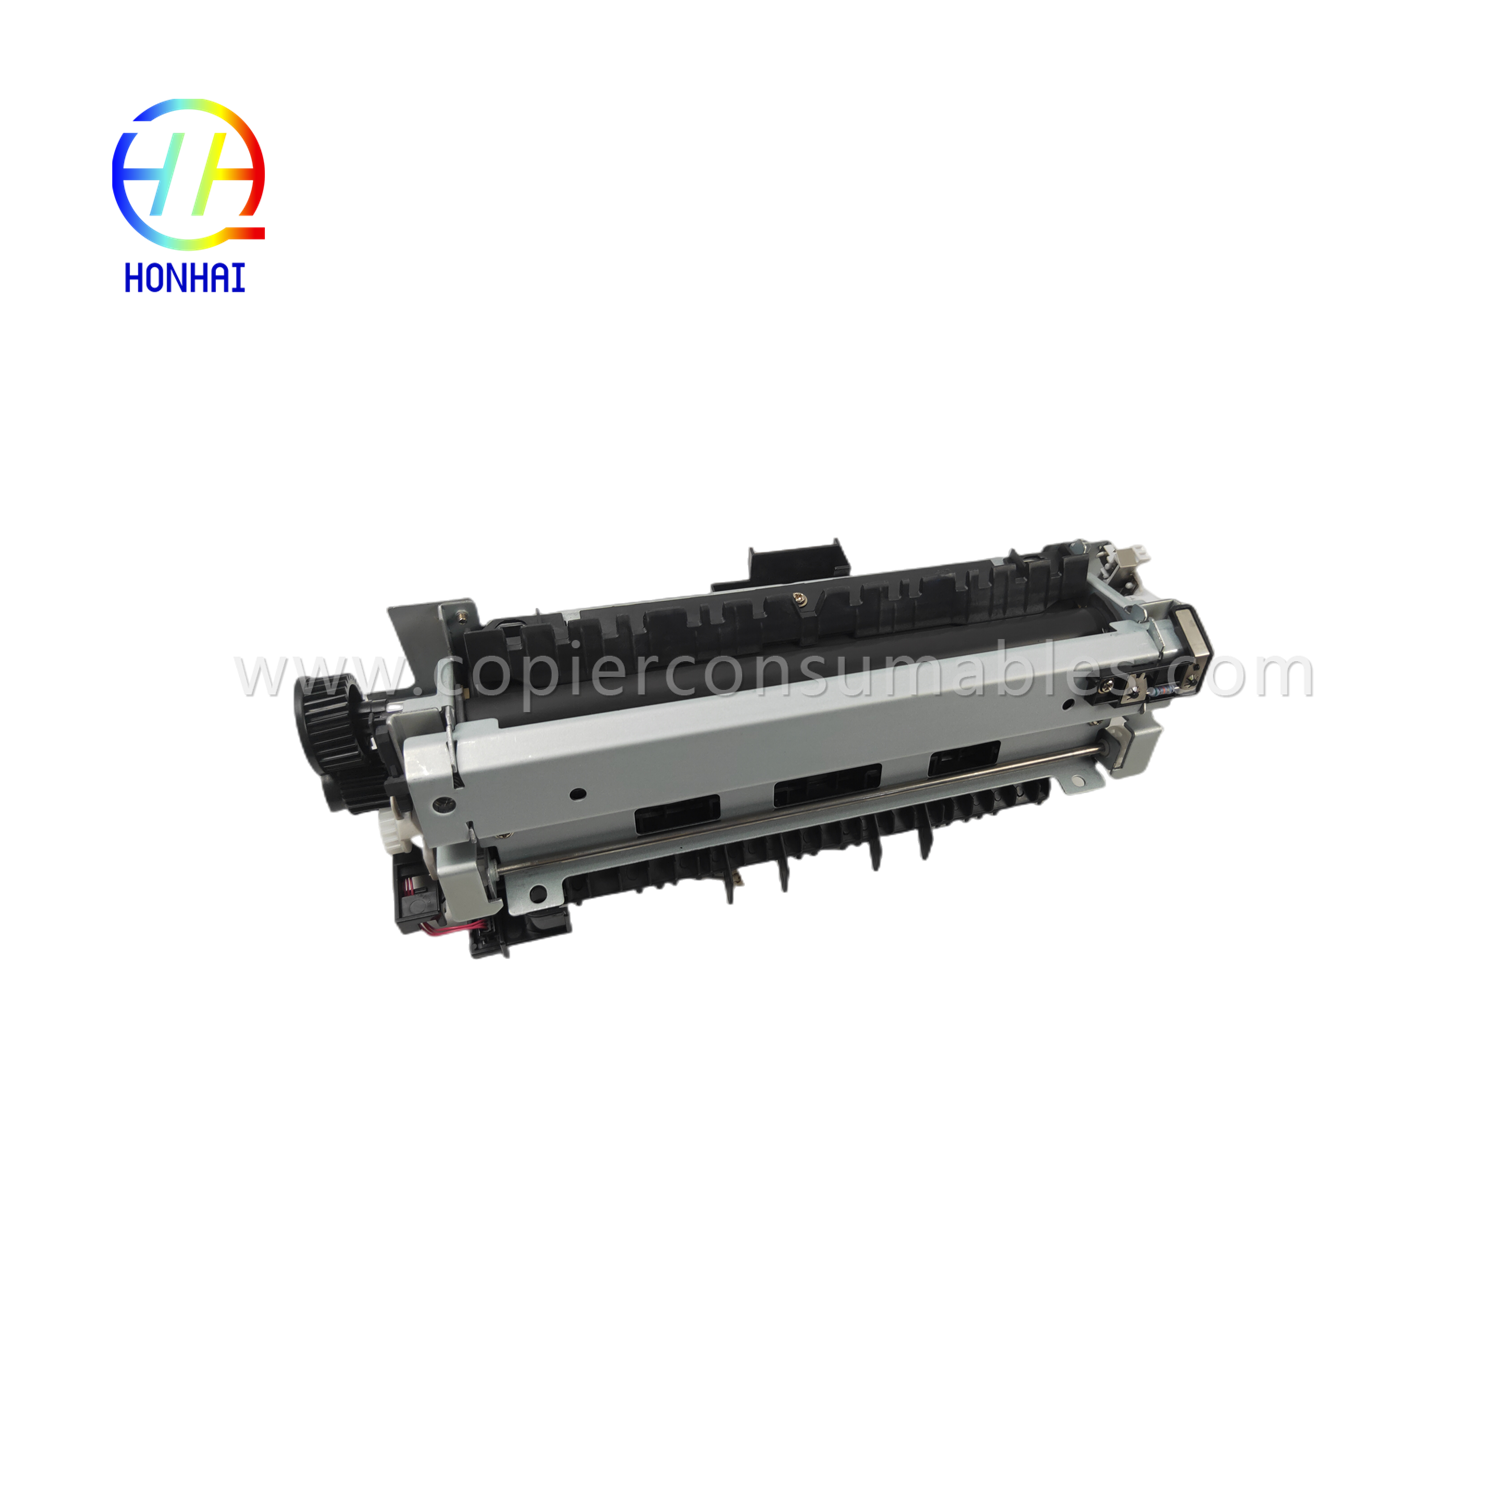 https://c585.goodao.net/fuser-assembly-220v-japan-for-hp-521-525-m521-m525-rm1-8508-rm1-8508-000-fuser-unit-product/